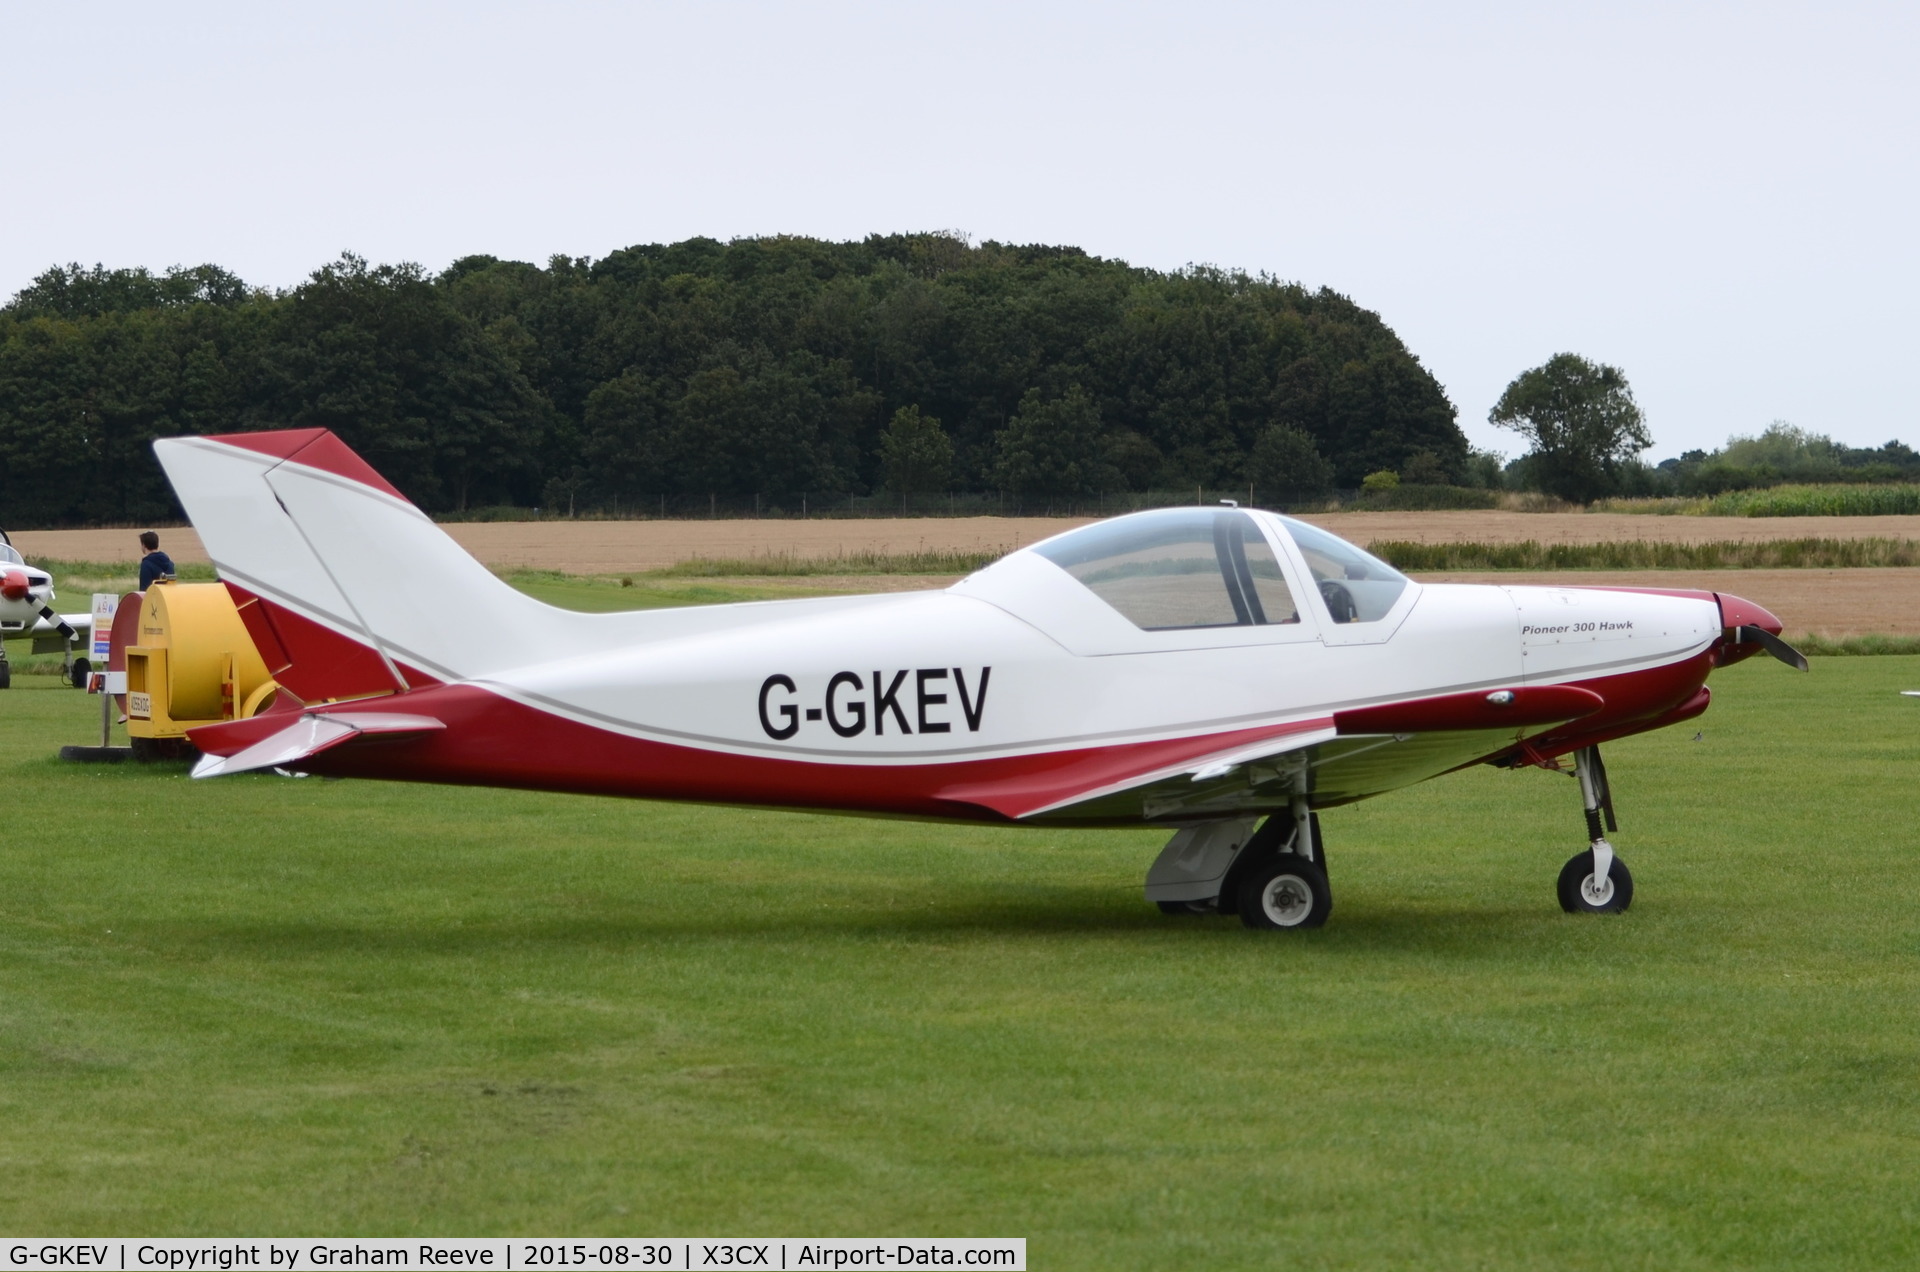 G-GKEV, 2010 Alpi Aviation Pioneer 300 Hawk C/N LAA 330A-14965, Parked at Northrepps.